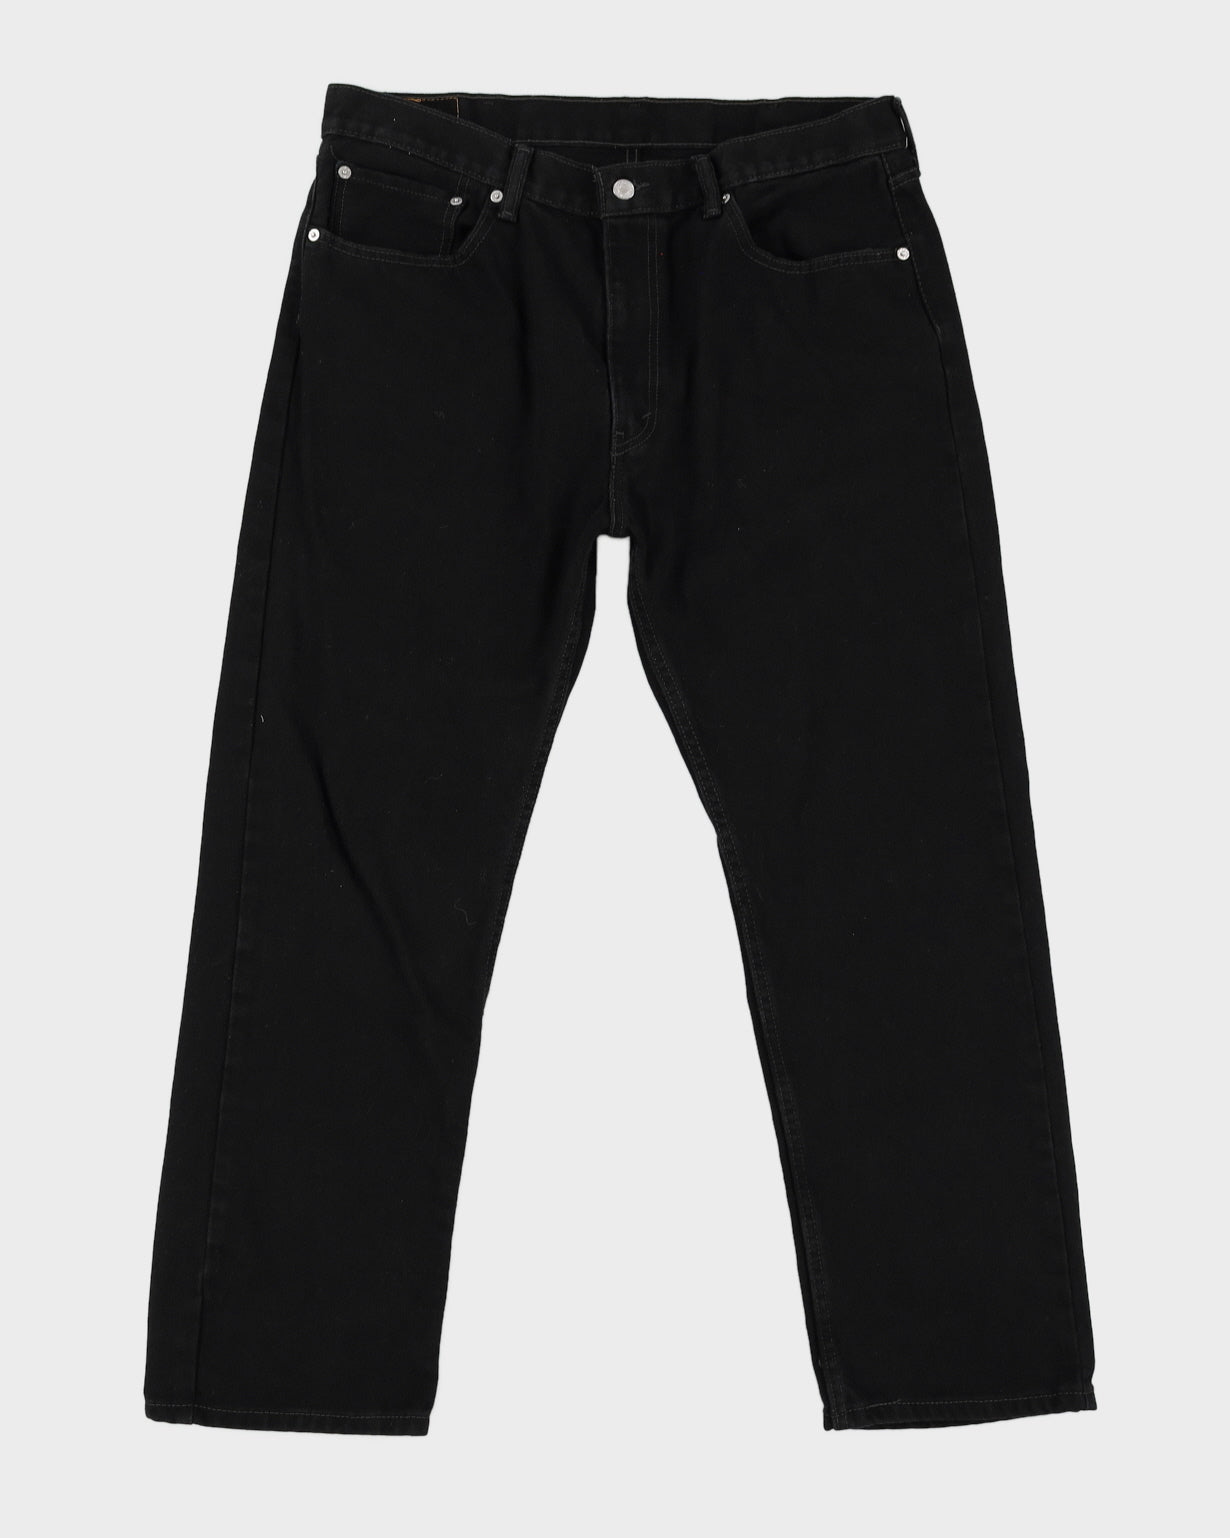 Levi's 505 Black Jeans - W38 L 30